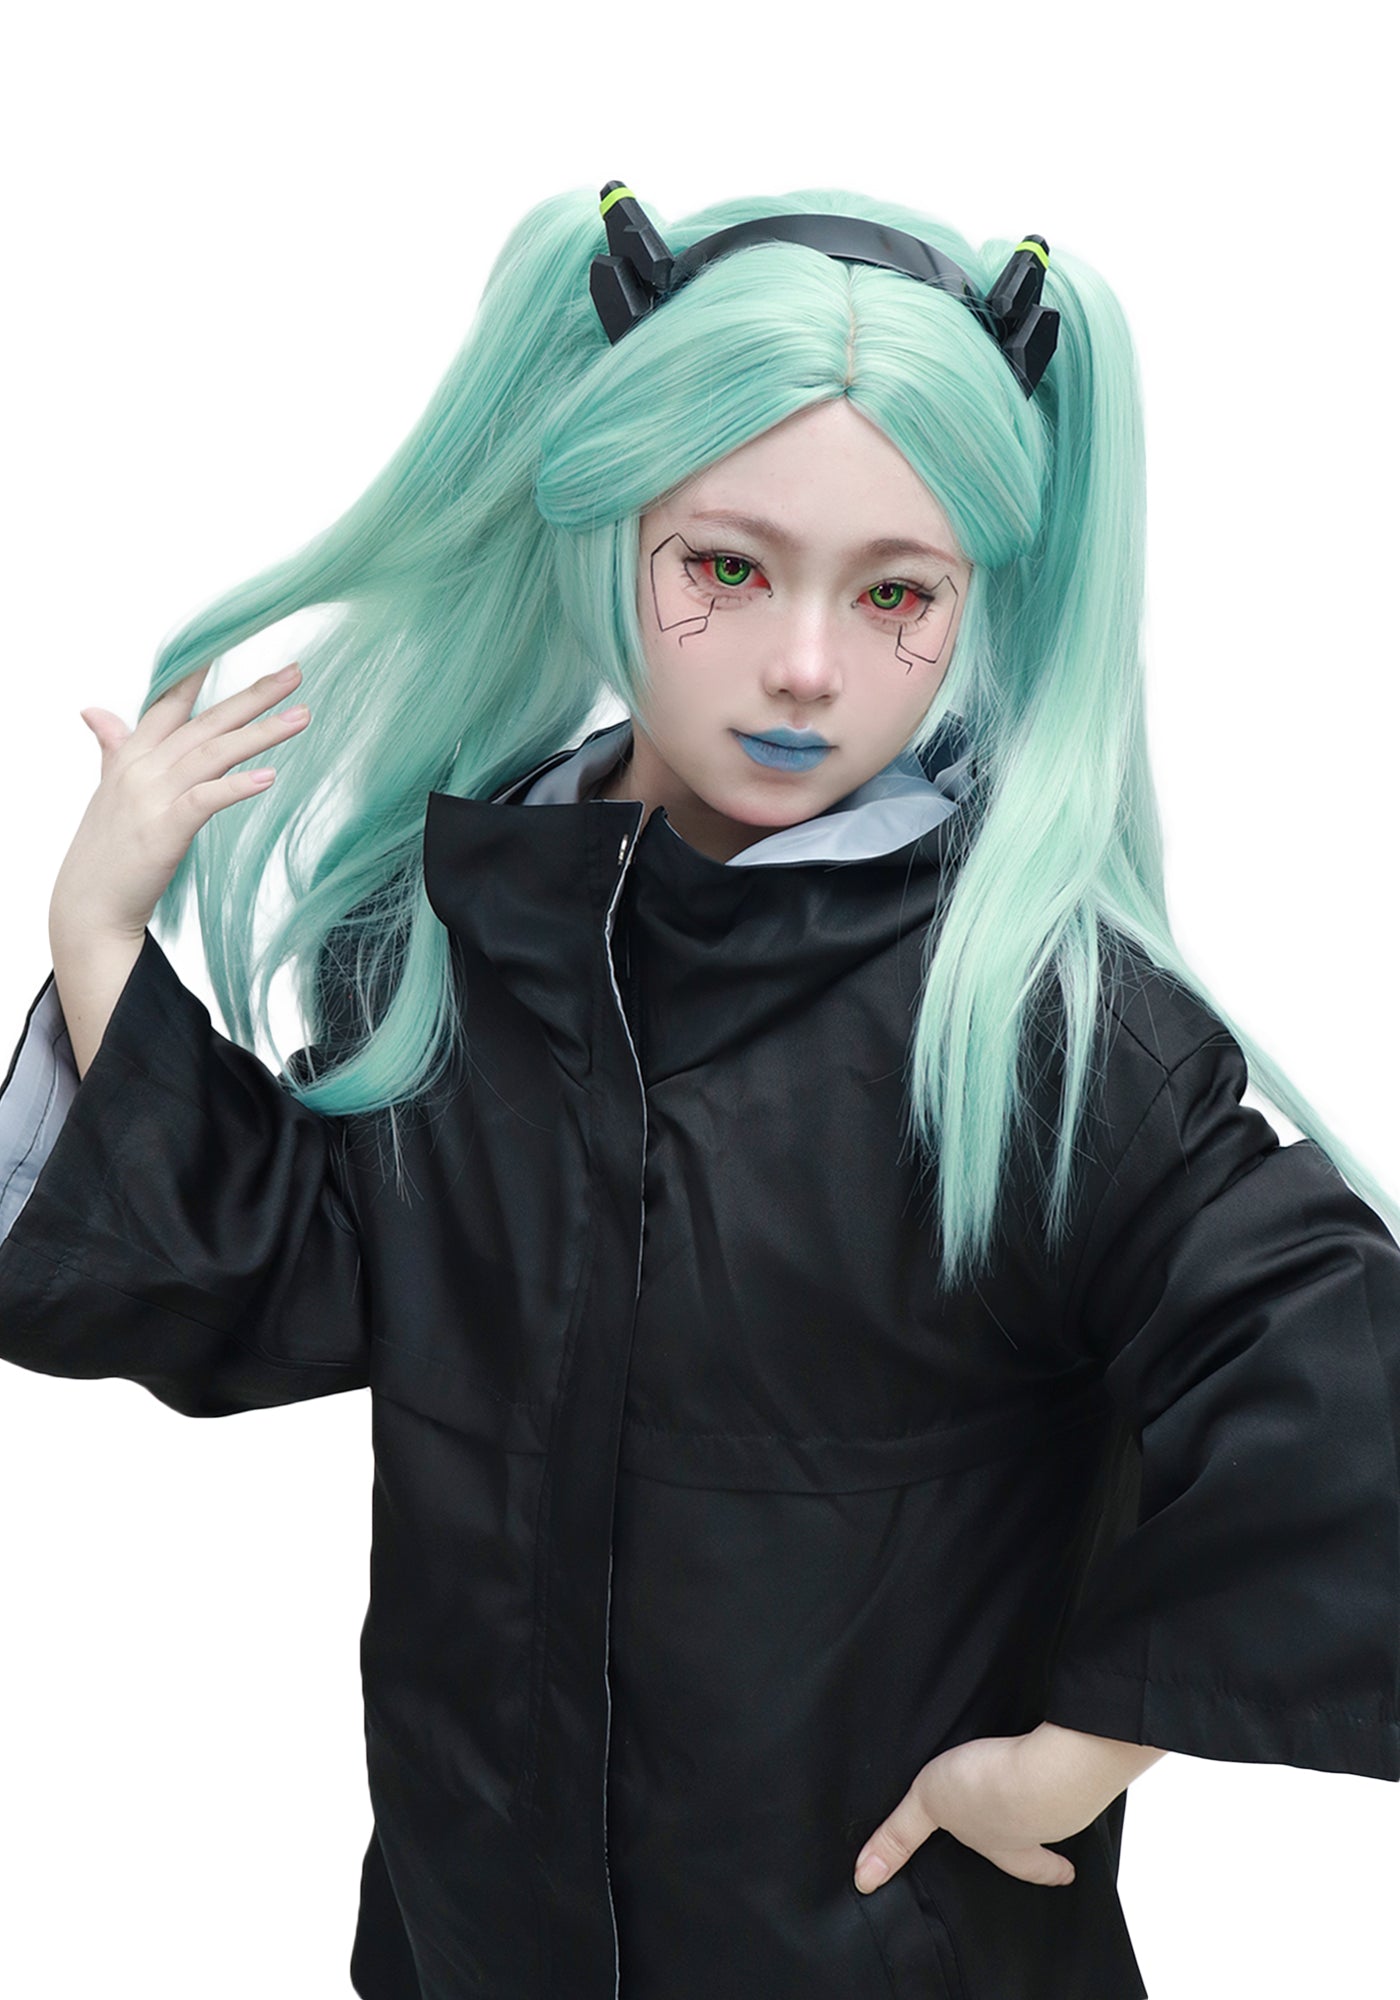 DAZCOS Rebecca Cosplay Wig for Anime Halloween Costume Green